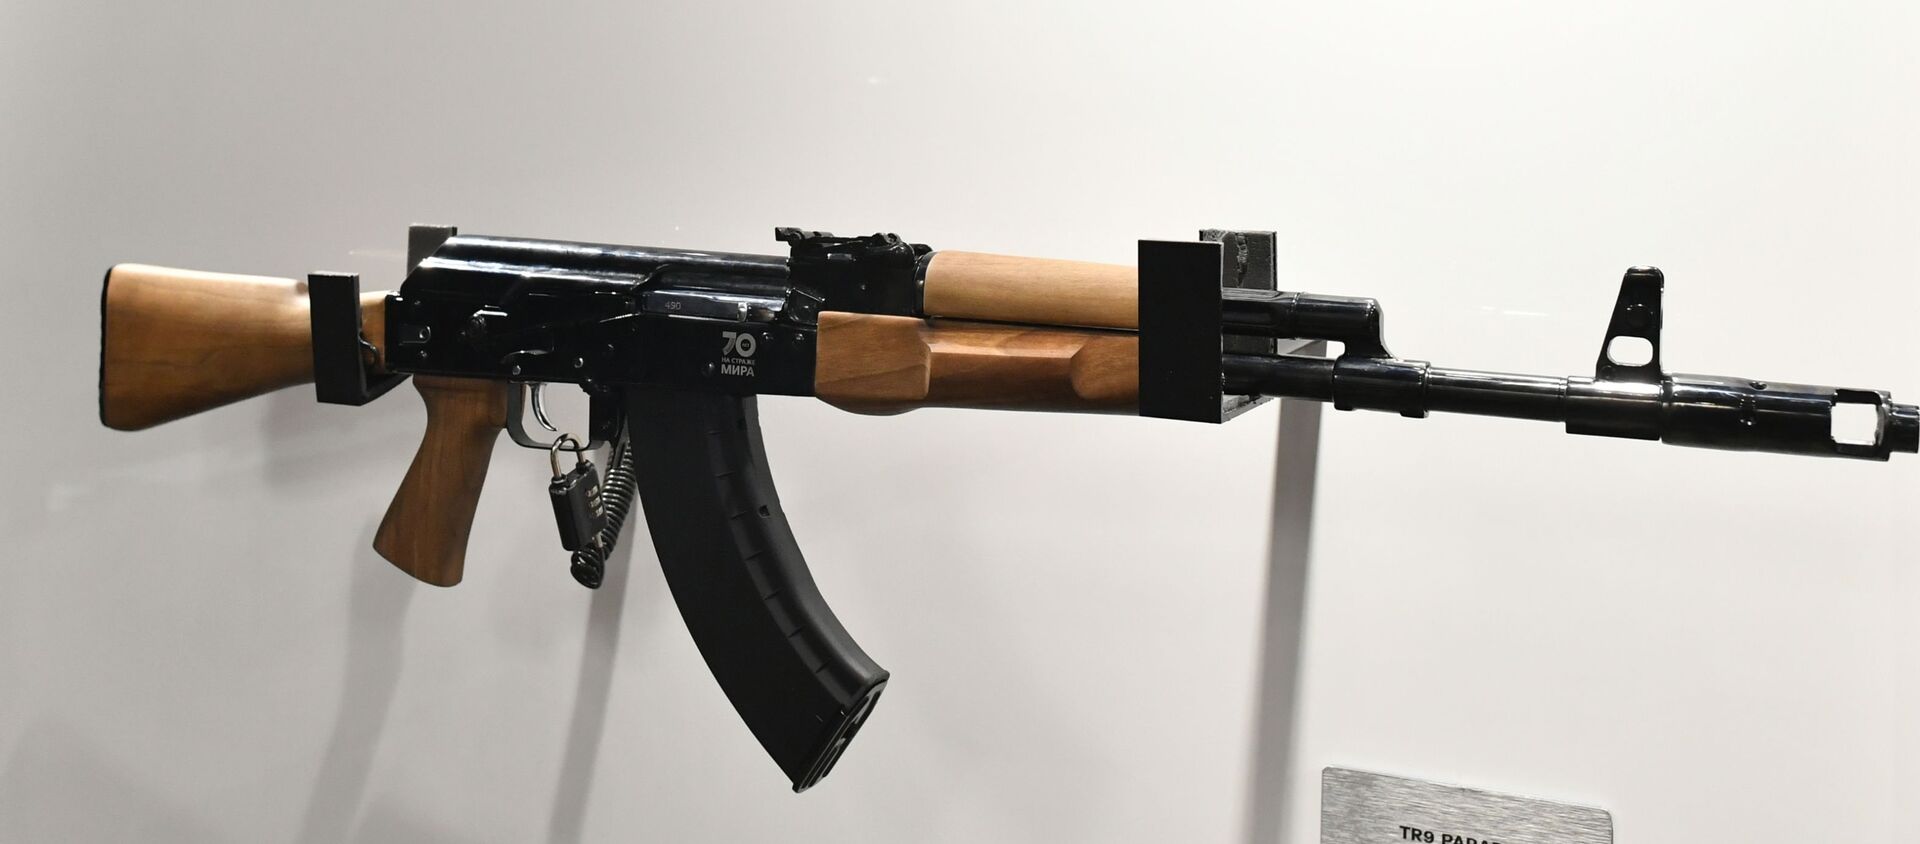 Una carabina civil TG2 de Kalashnikov. - Sputnik Mundo, 1920, 09.02.2021